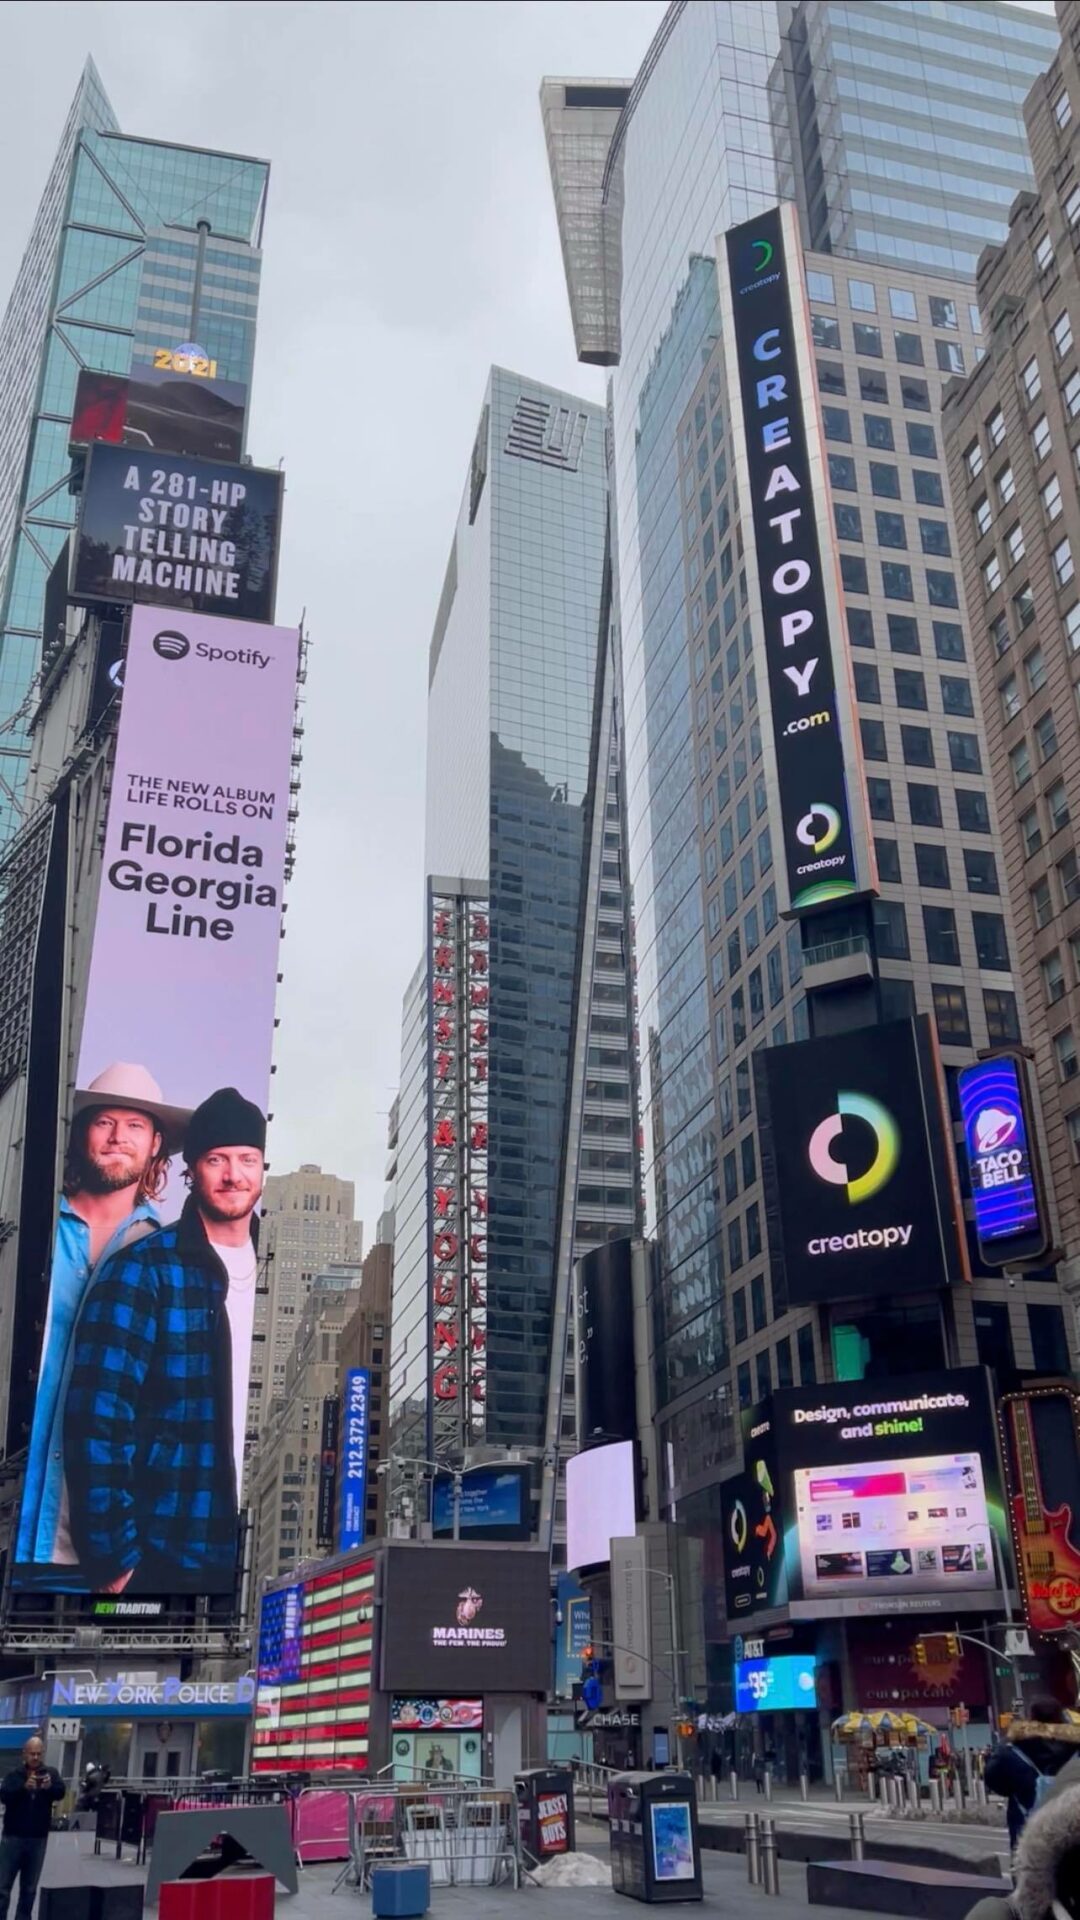 Central Times Square billboards